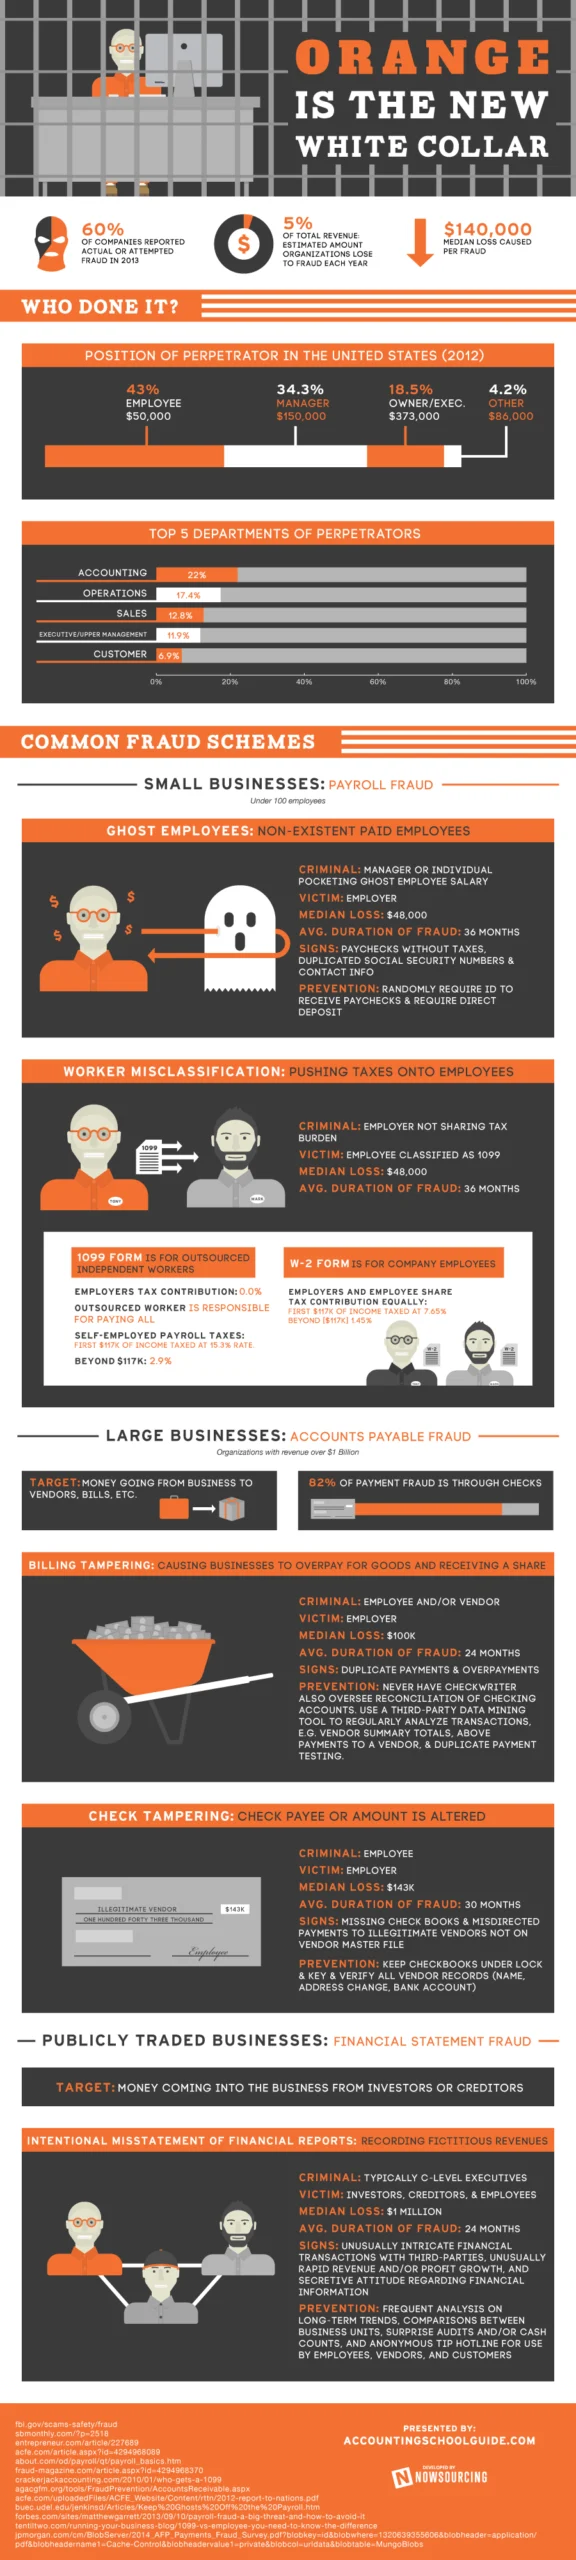 Orange Is The New White Collar (Infographic)